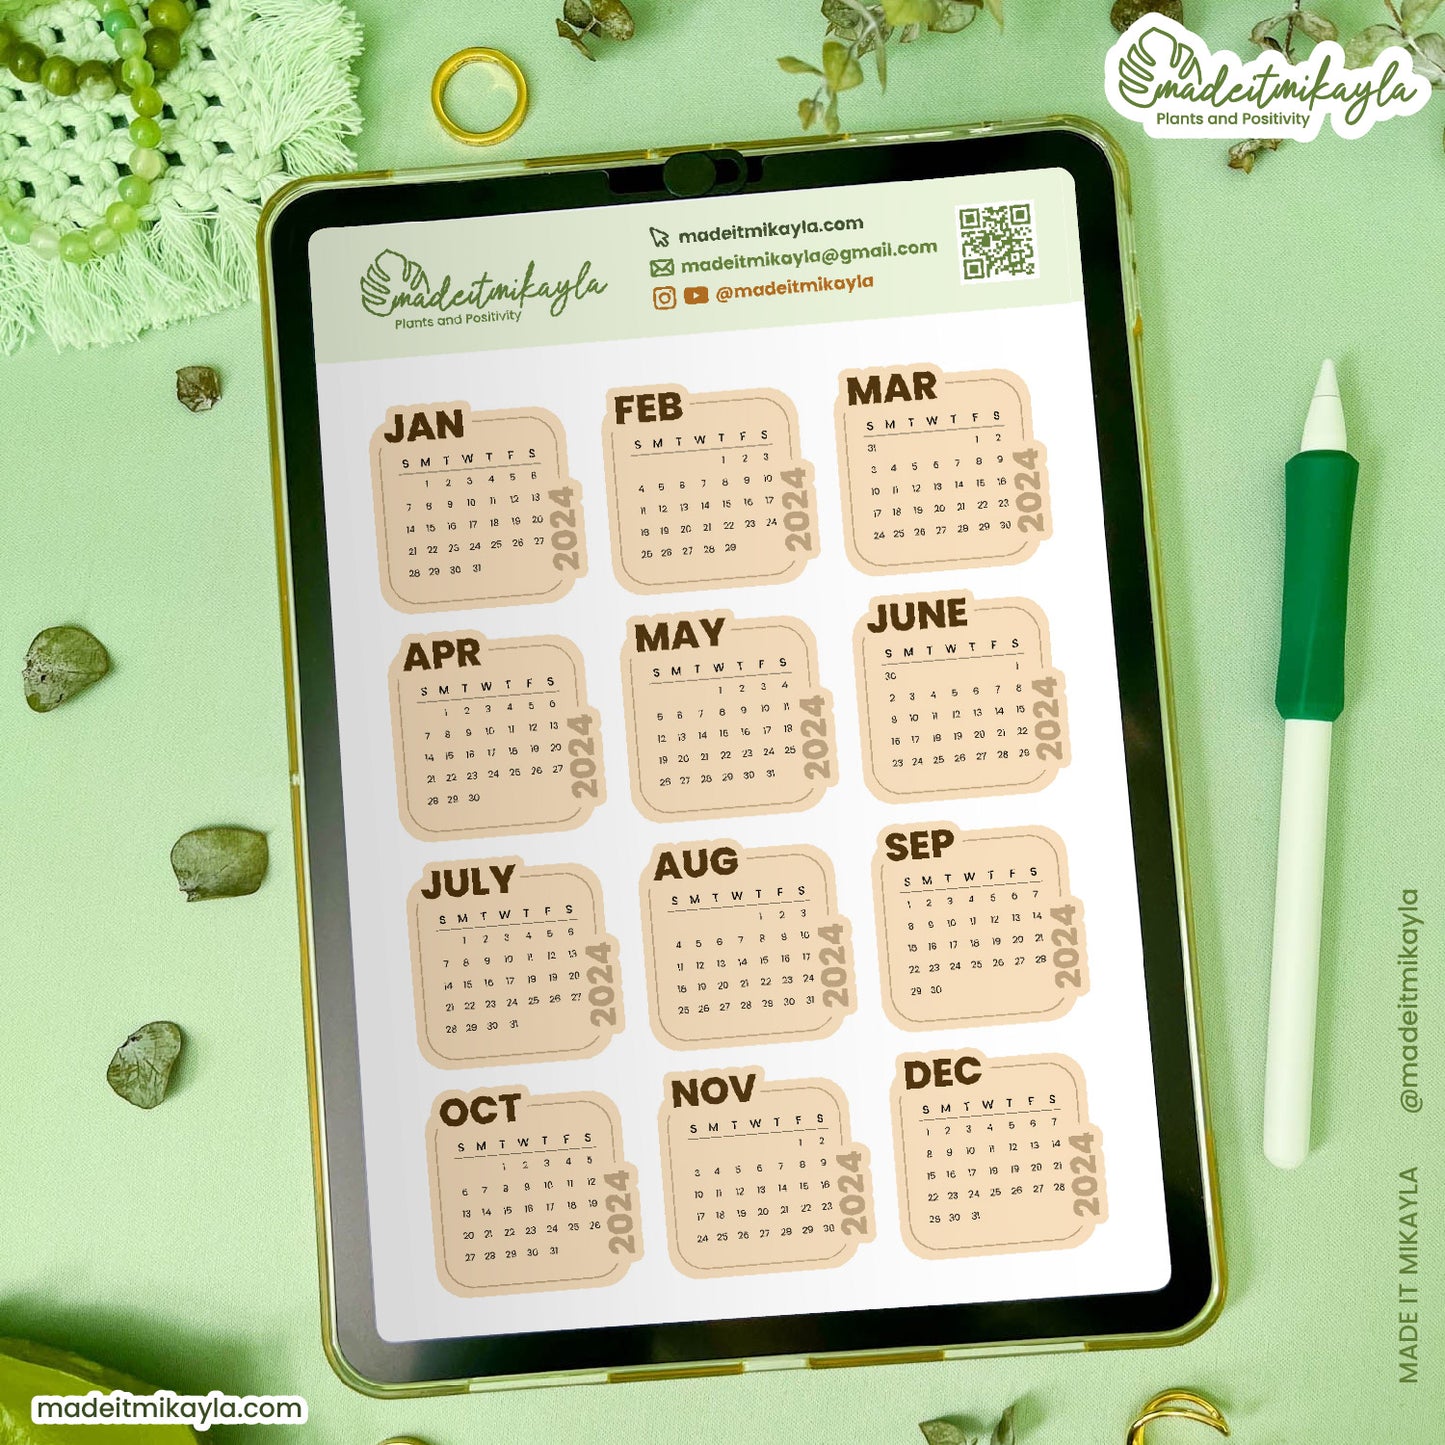 Orange 2024 Calendars Digital Stickers | MadeItMikayla